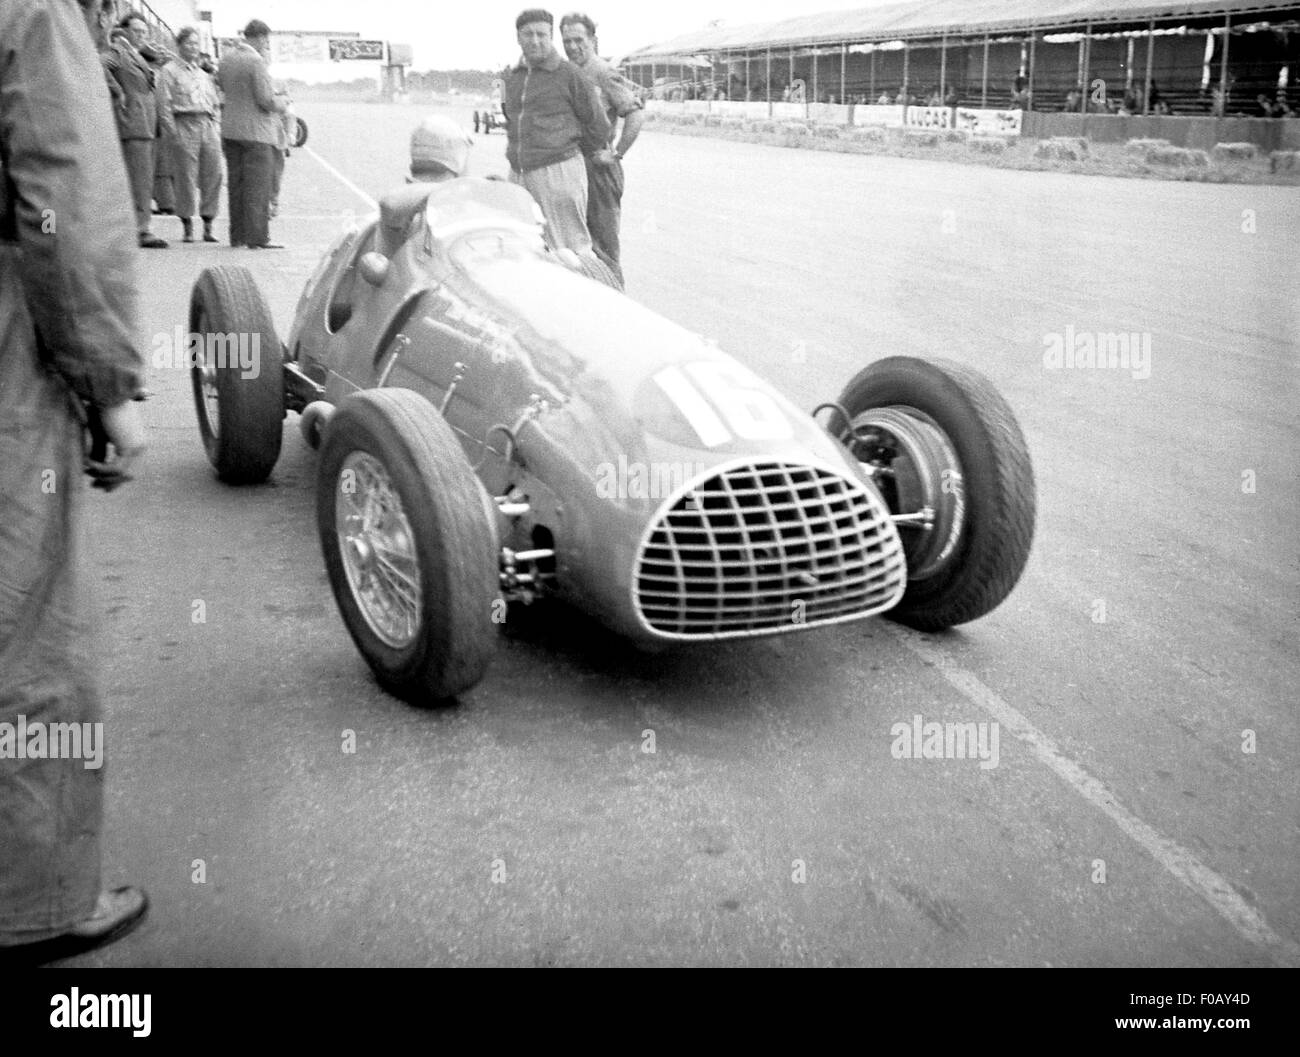 Alberto Ascari in seinem Ferrari Stockfotografie - Alamy